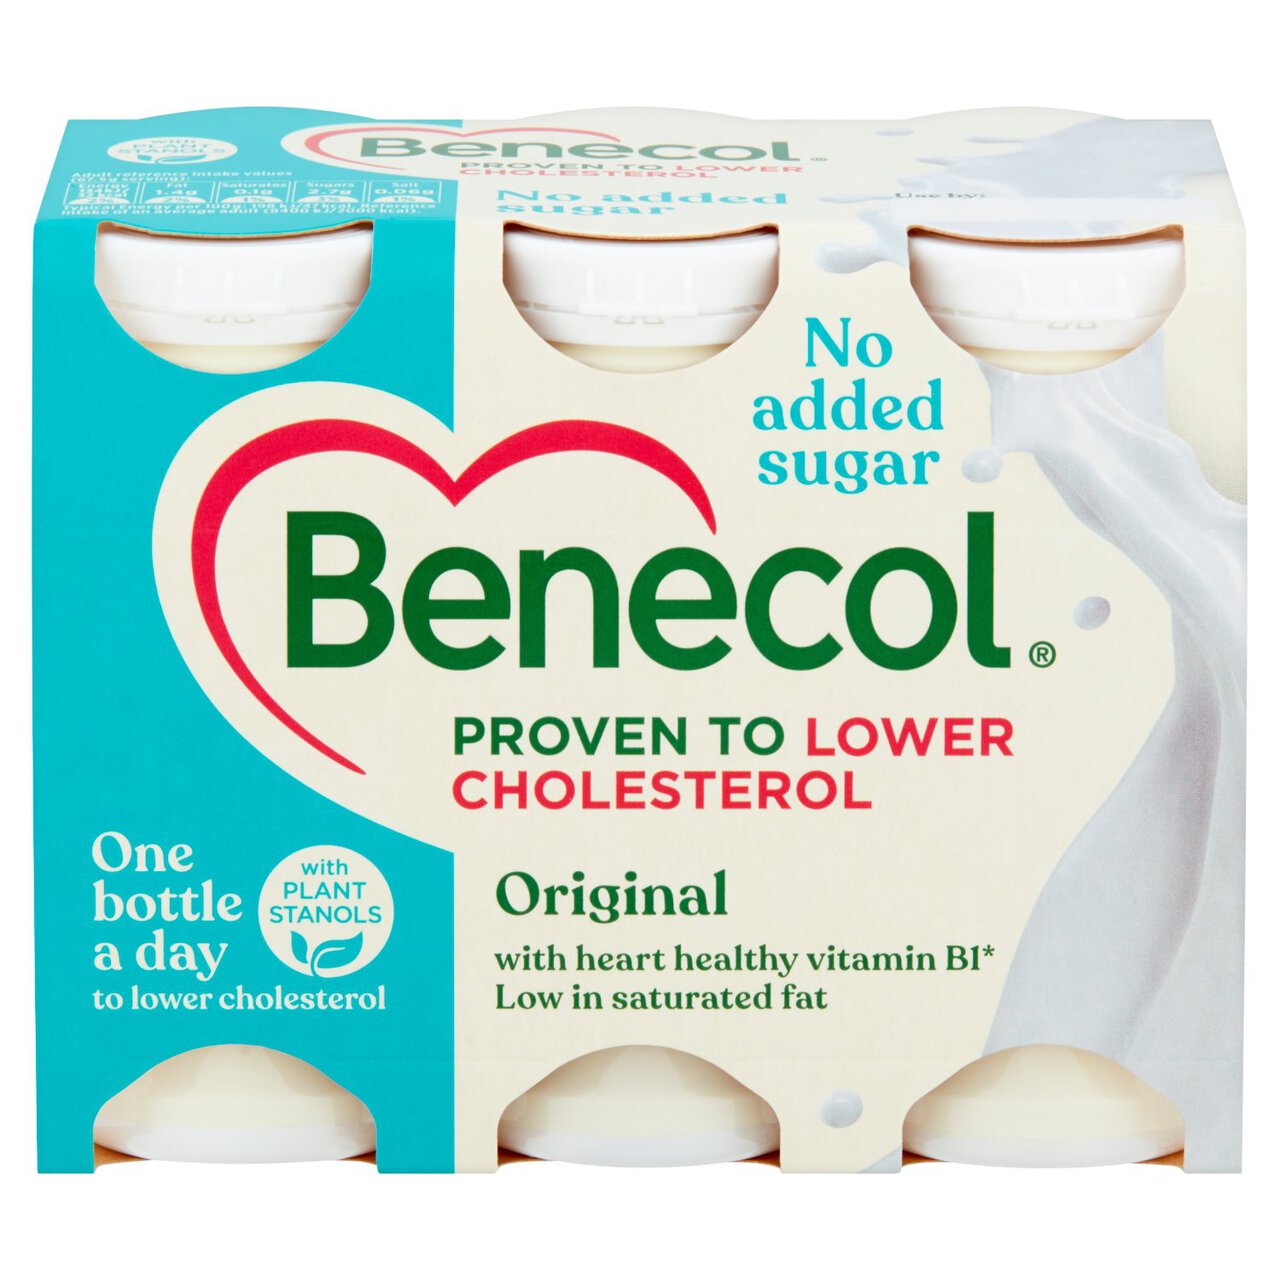 Benecol Cholesterol Lowering Original Yoghurt Drink No Added Sugar 6 x 67.5g